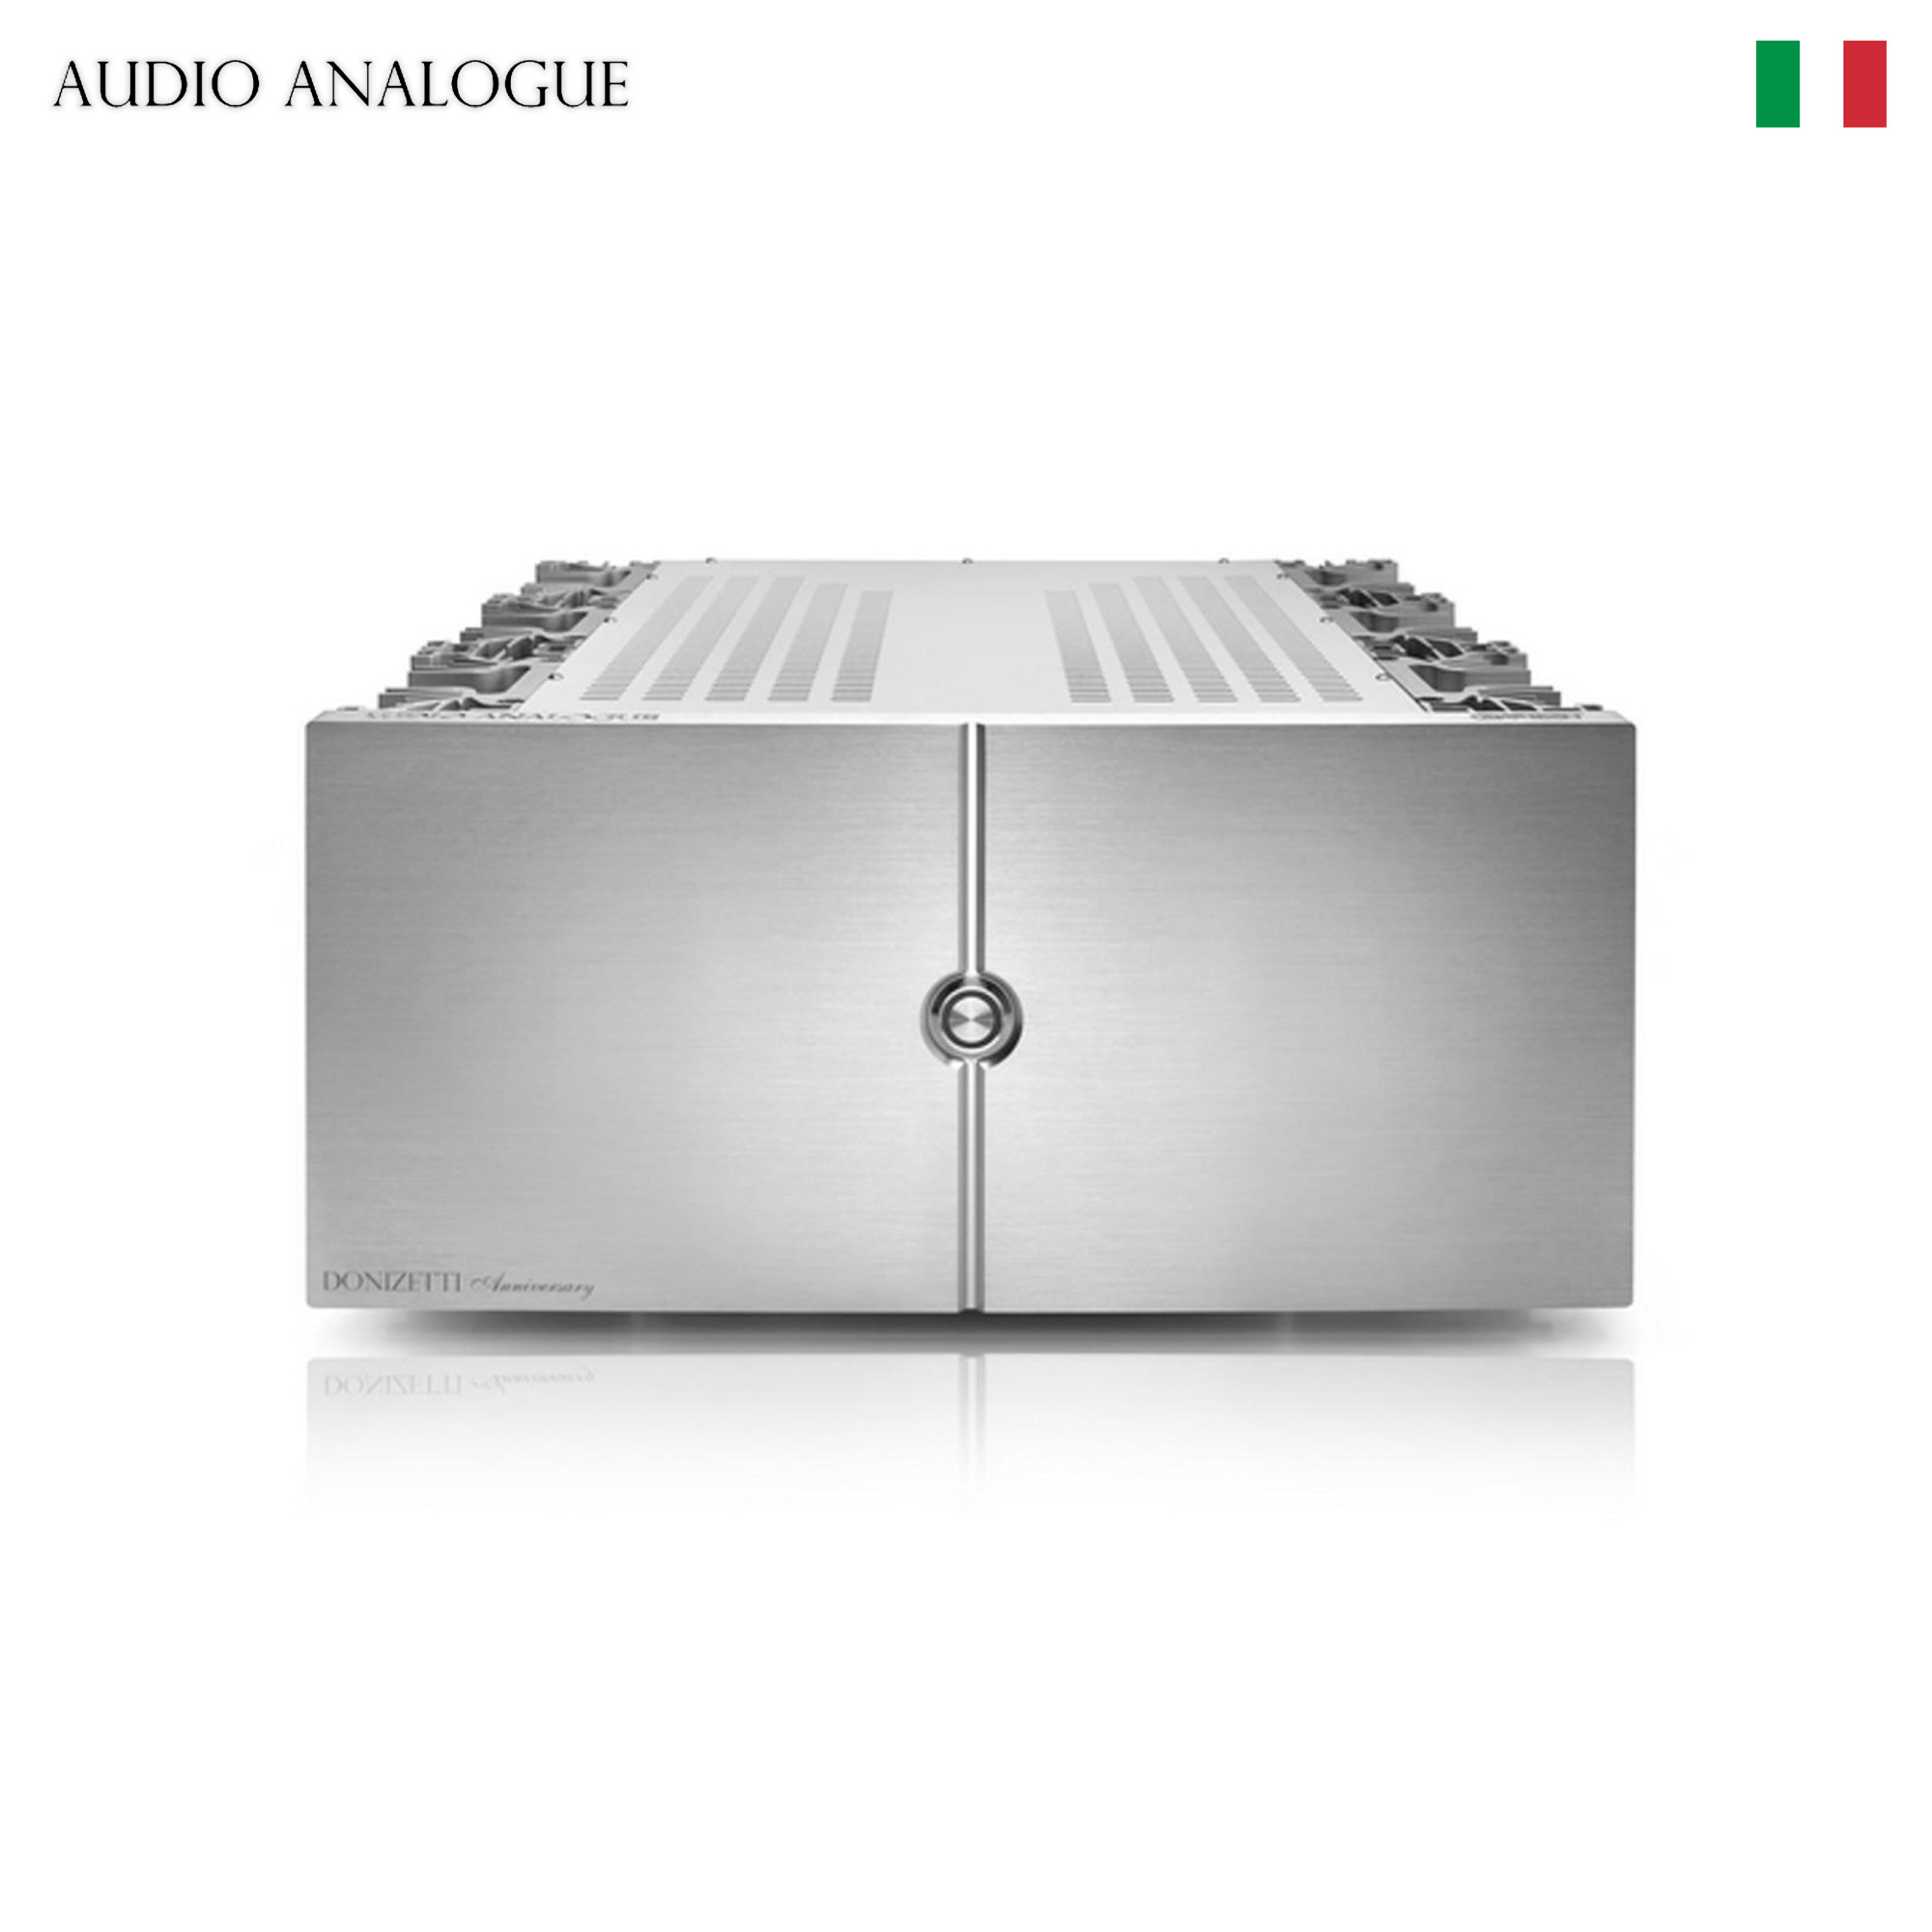 Power Amplifier Audio Analogue Donizetti Anniversary